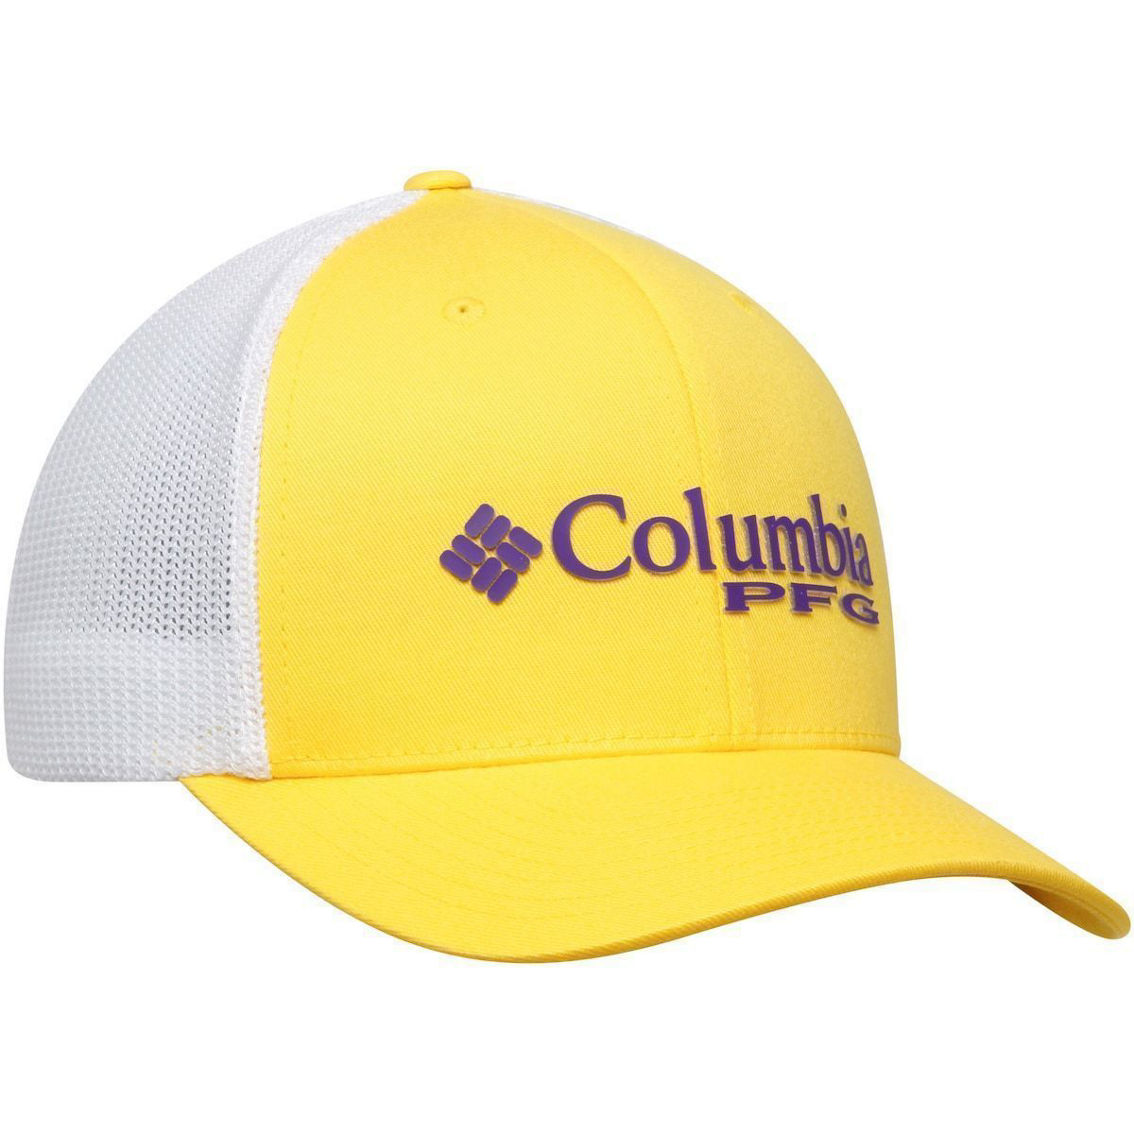 Men's Columbia Gold LSU Tigers Collegiate PFG Flex Hat - Image 4 of 4